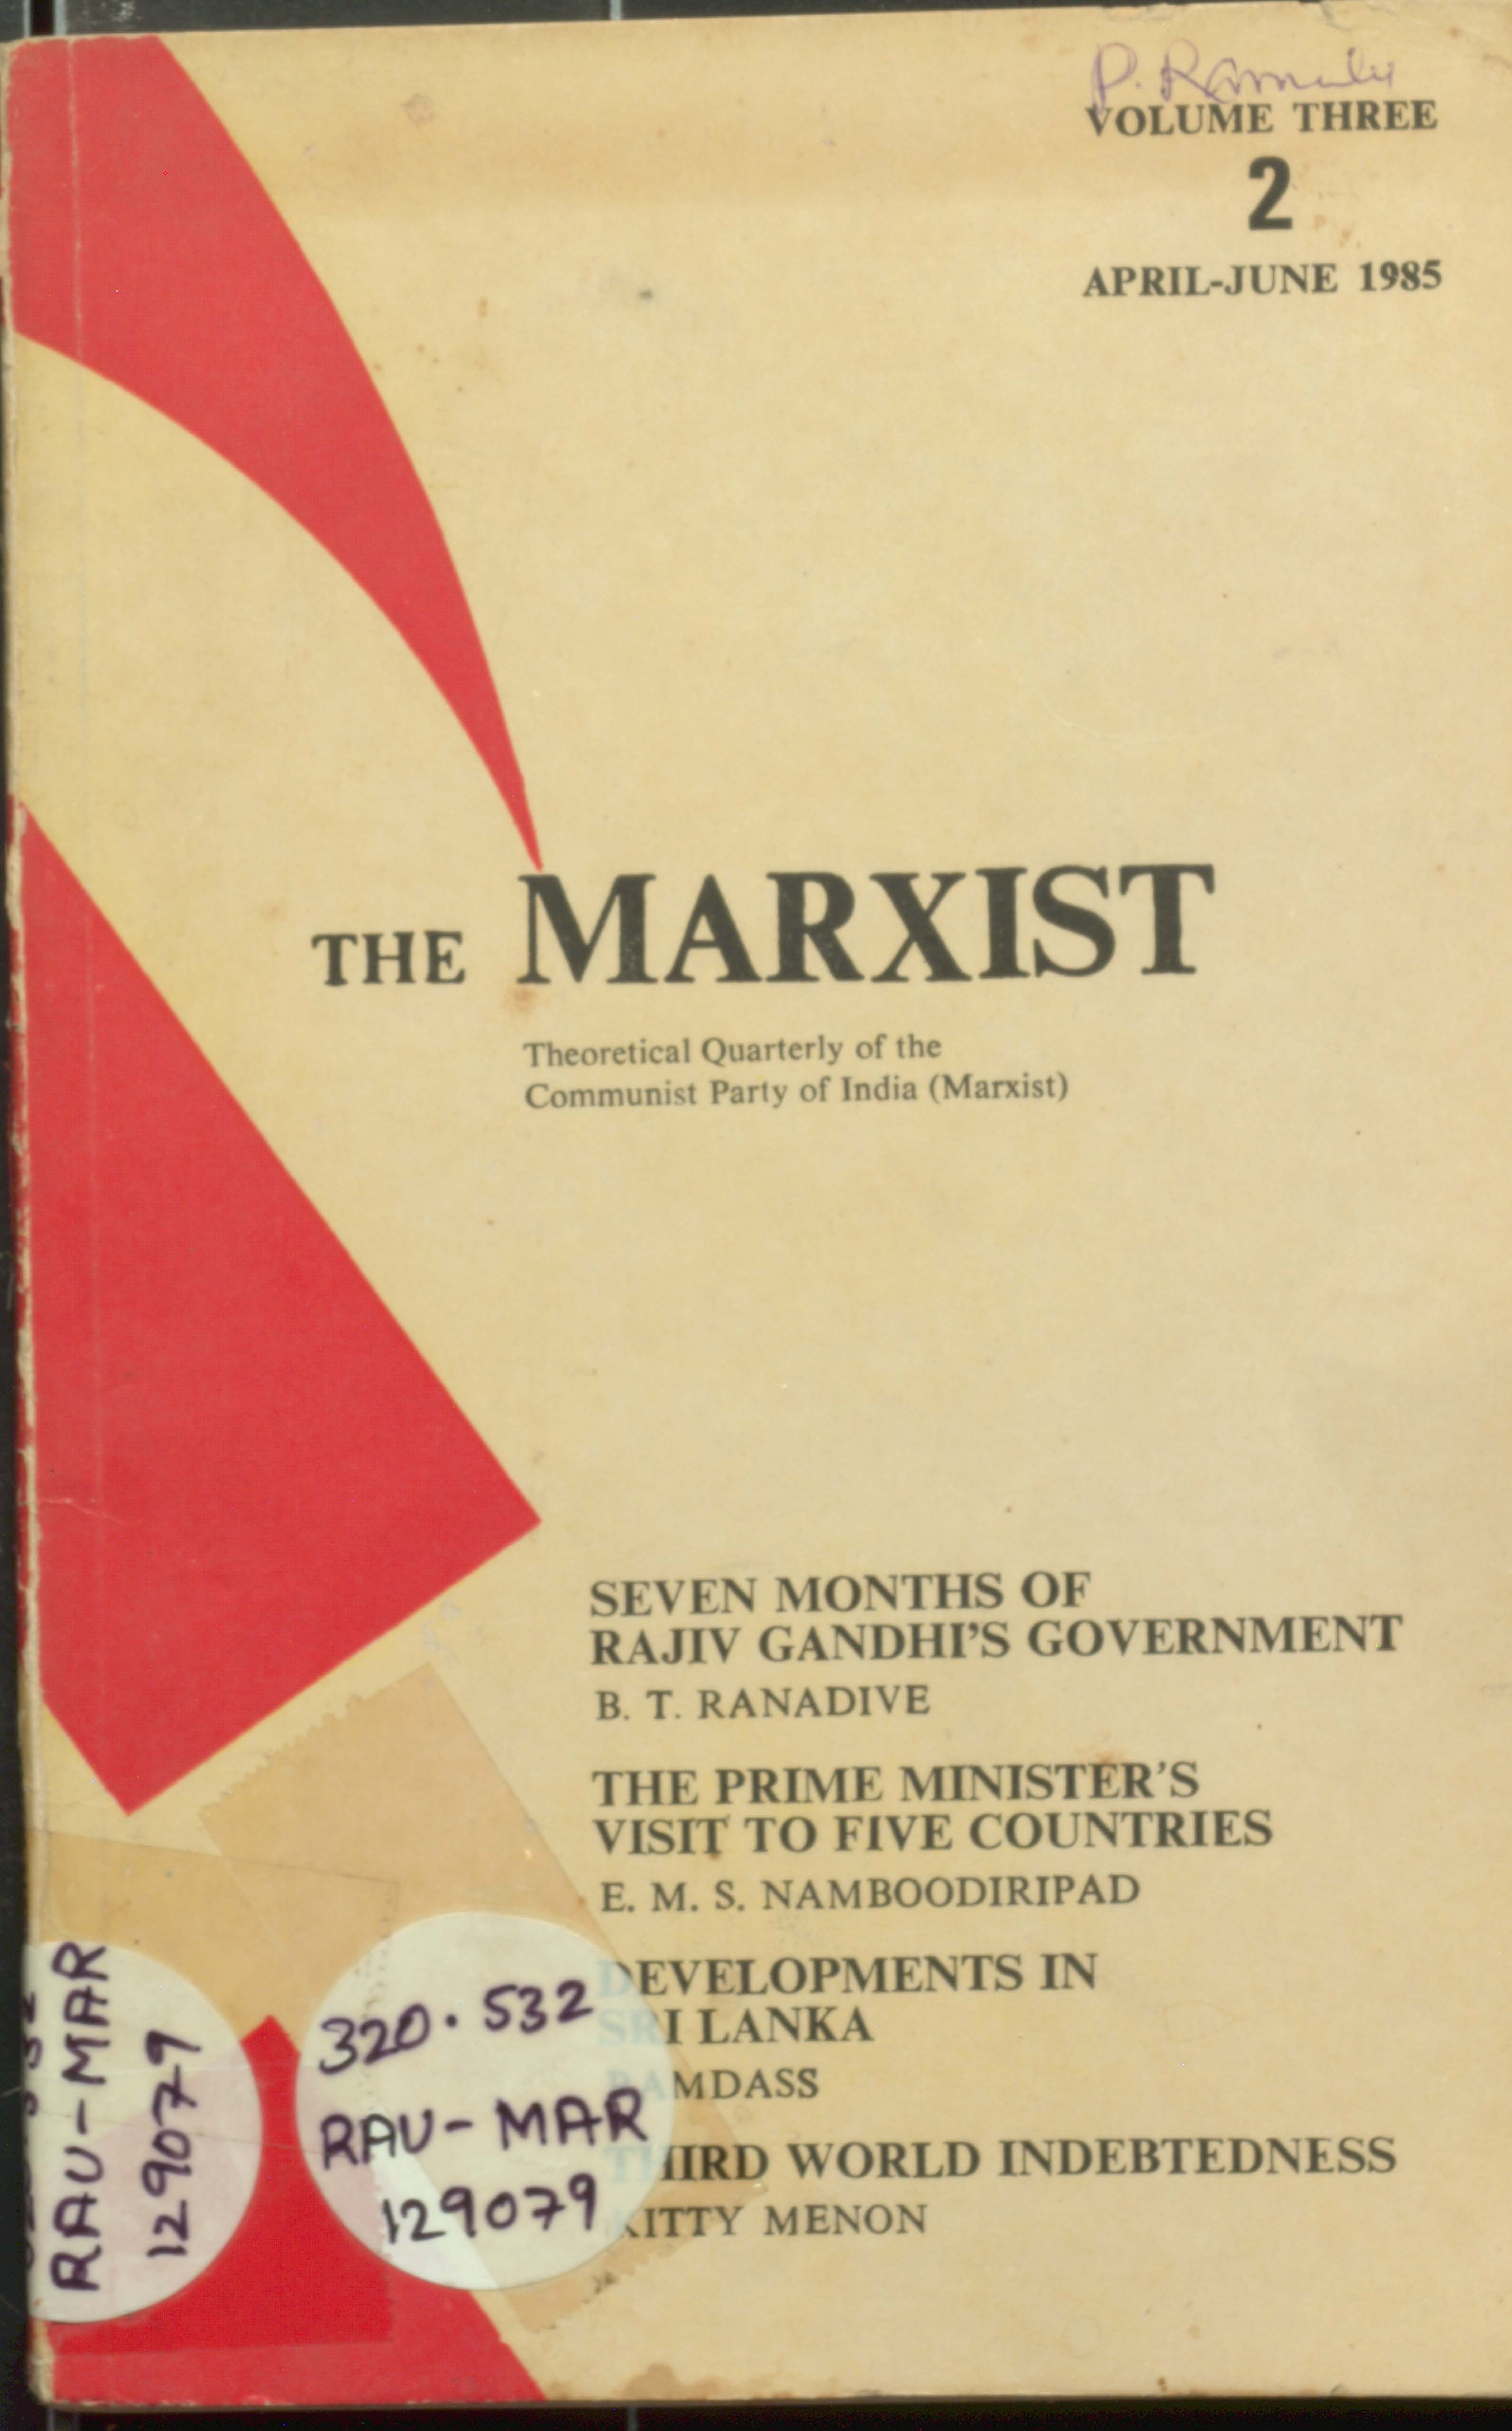 The marxist volume three-2 April-june 1985